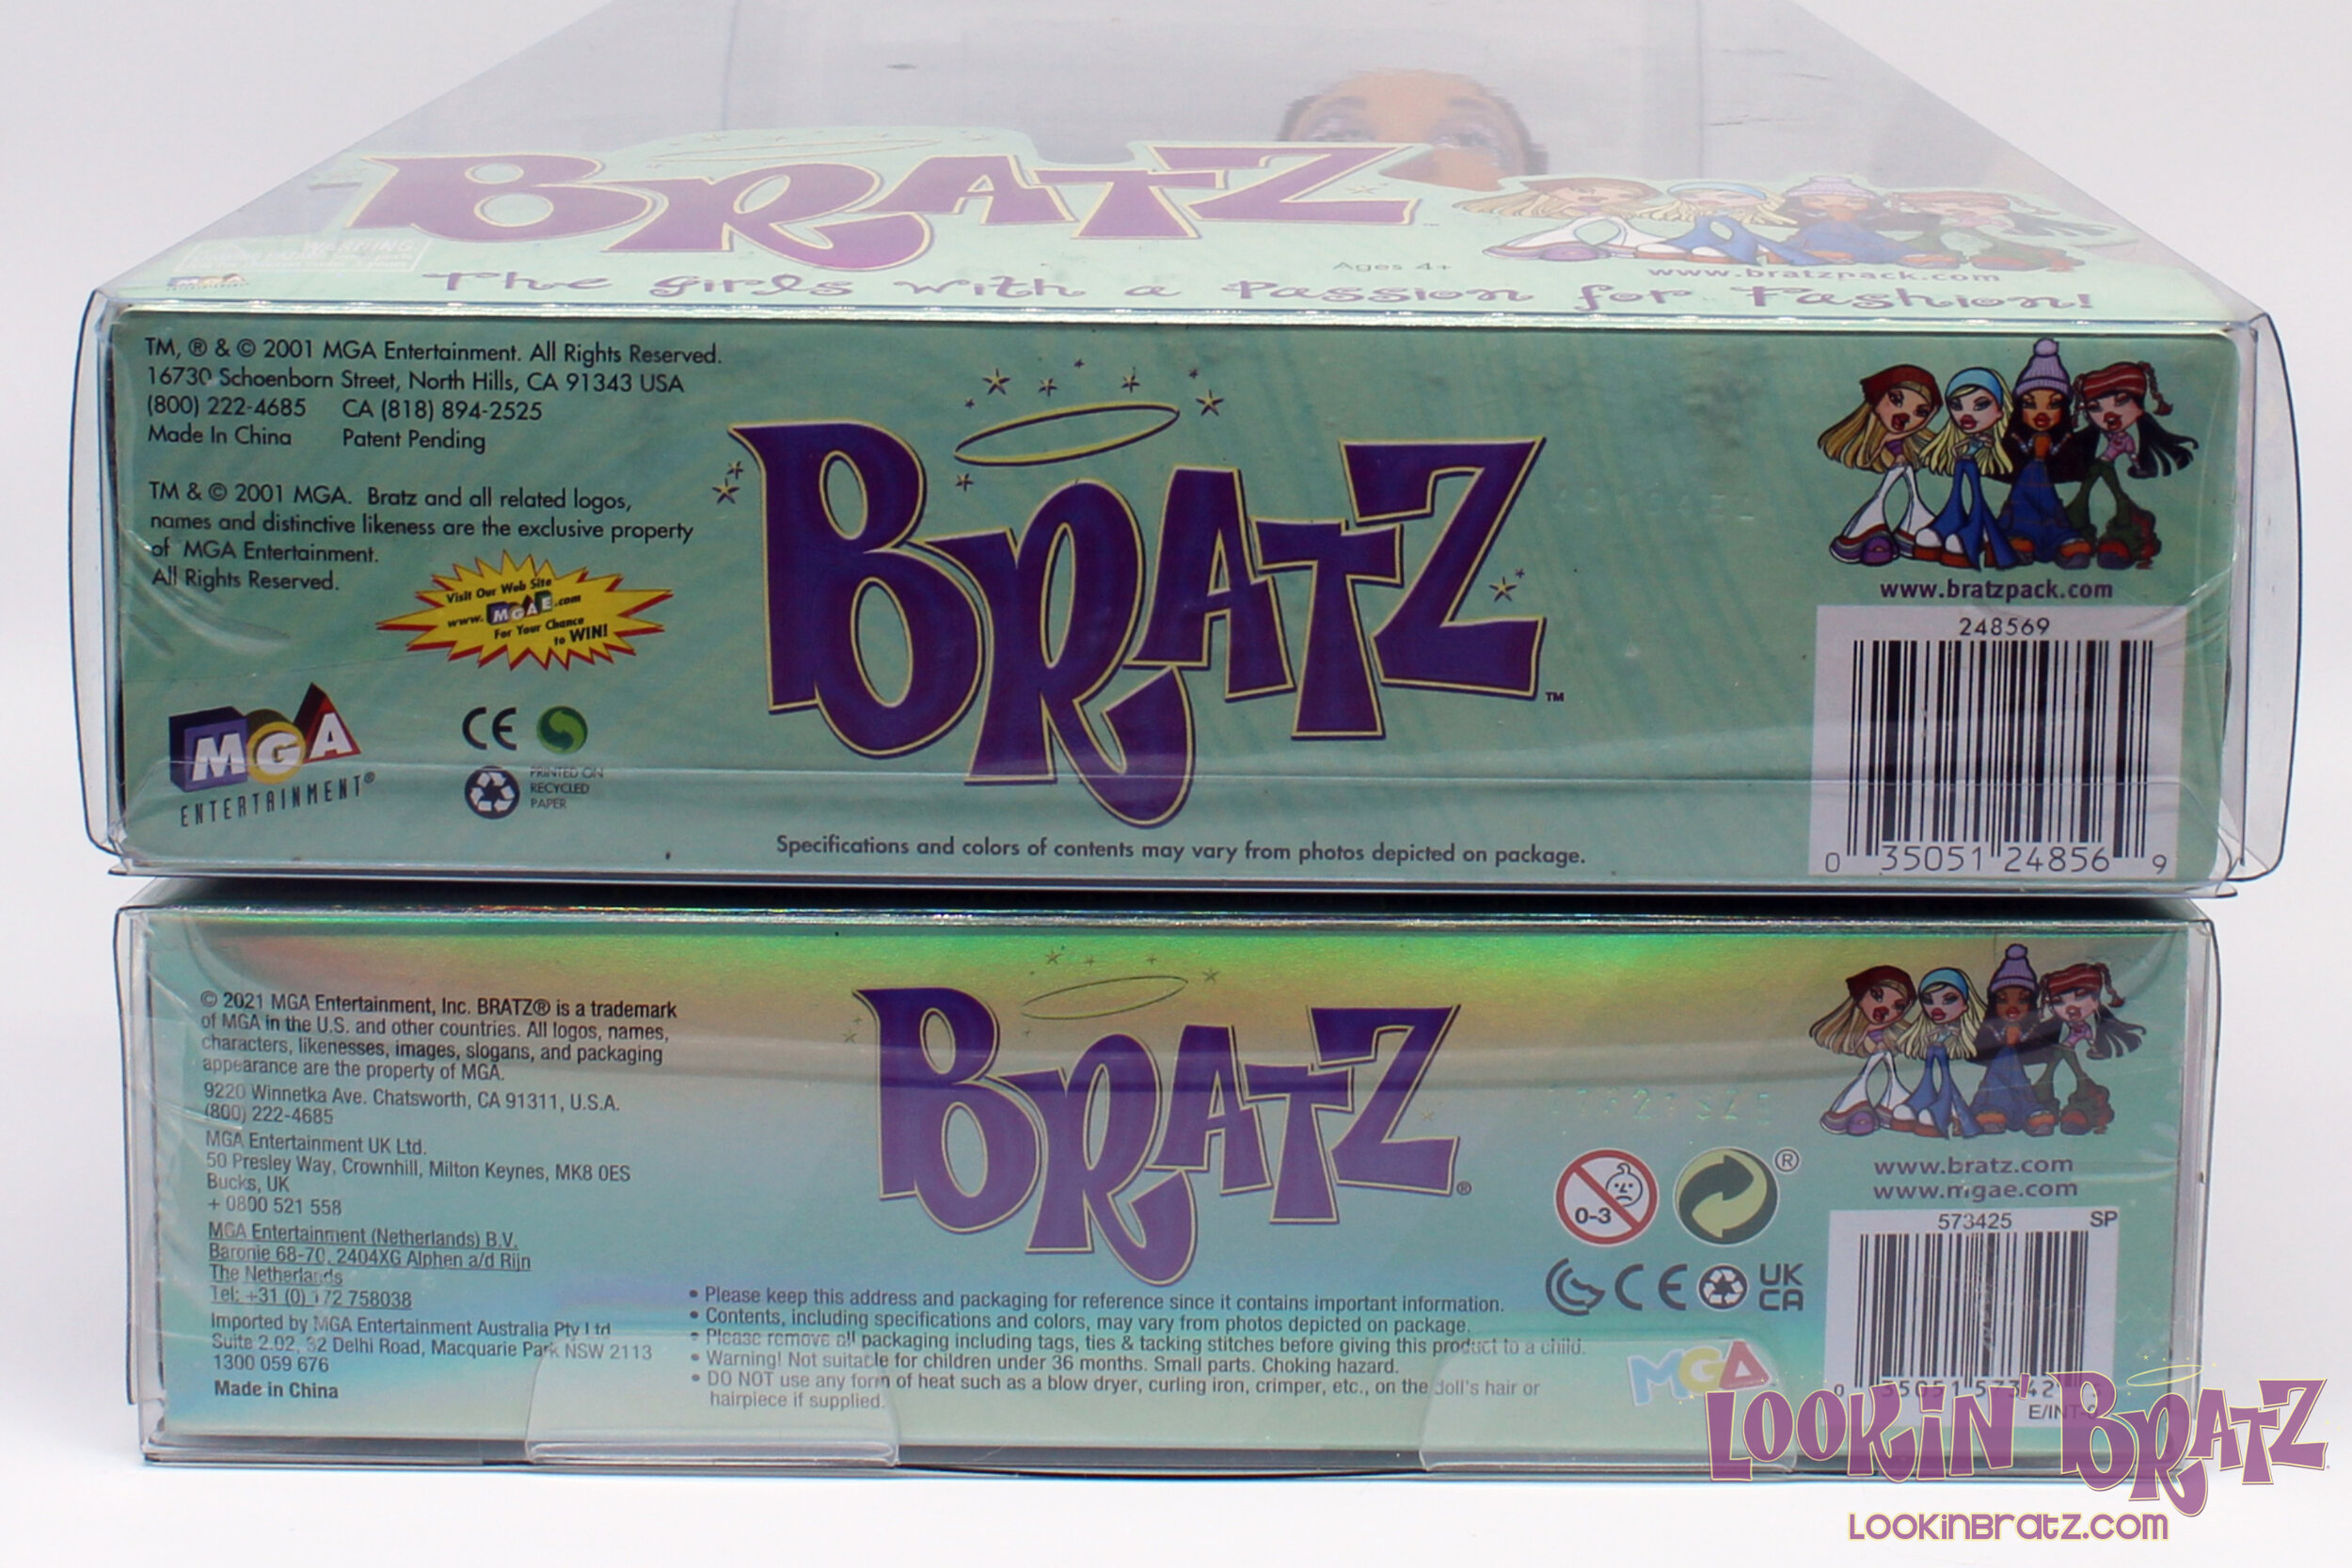 Bratz First Edition 2005 Re-Release vs. 2021 Re-Release Yasmin (Bottom)